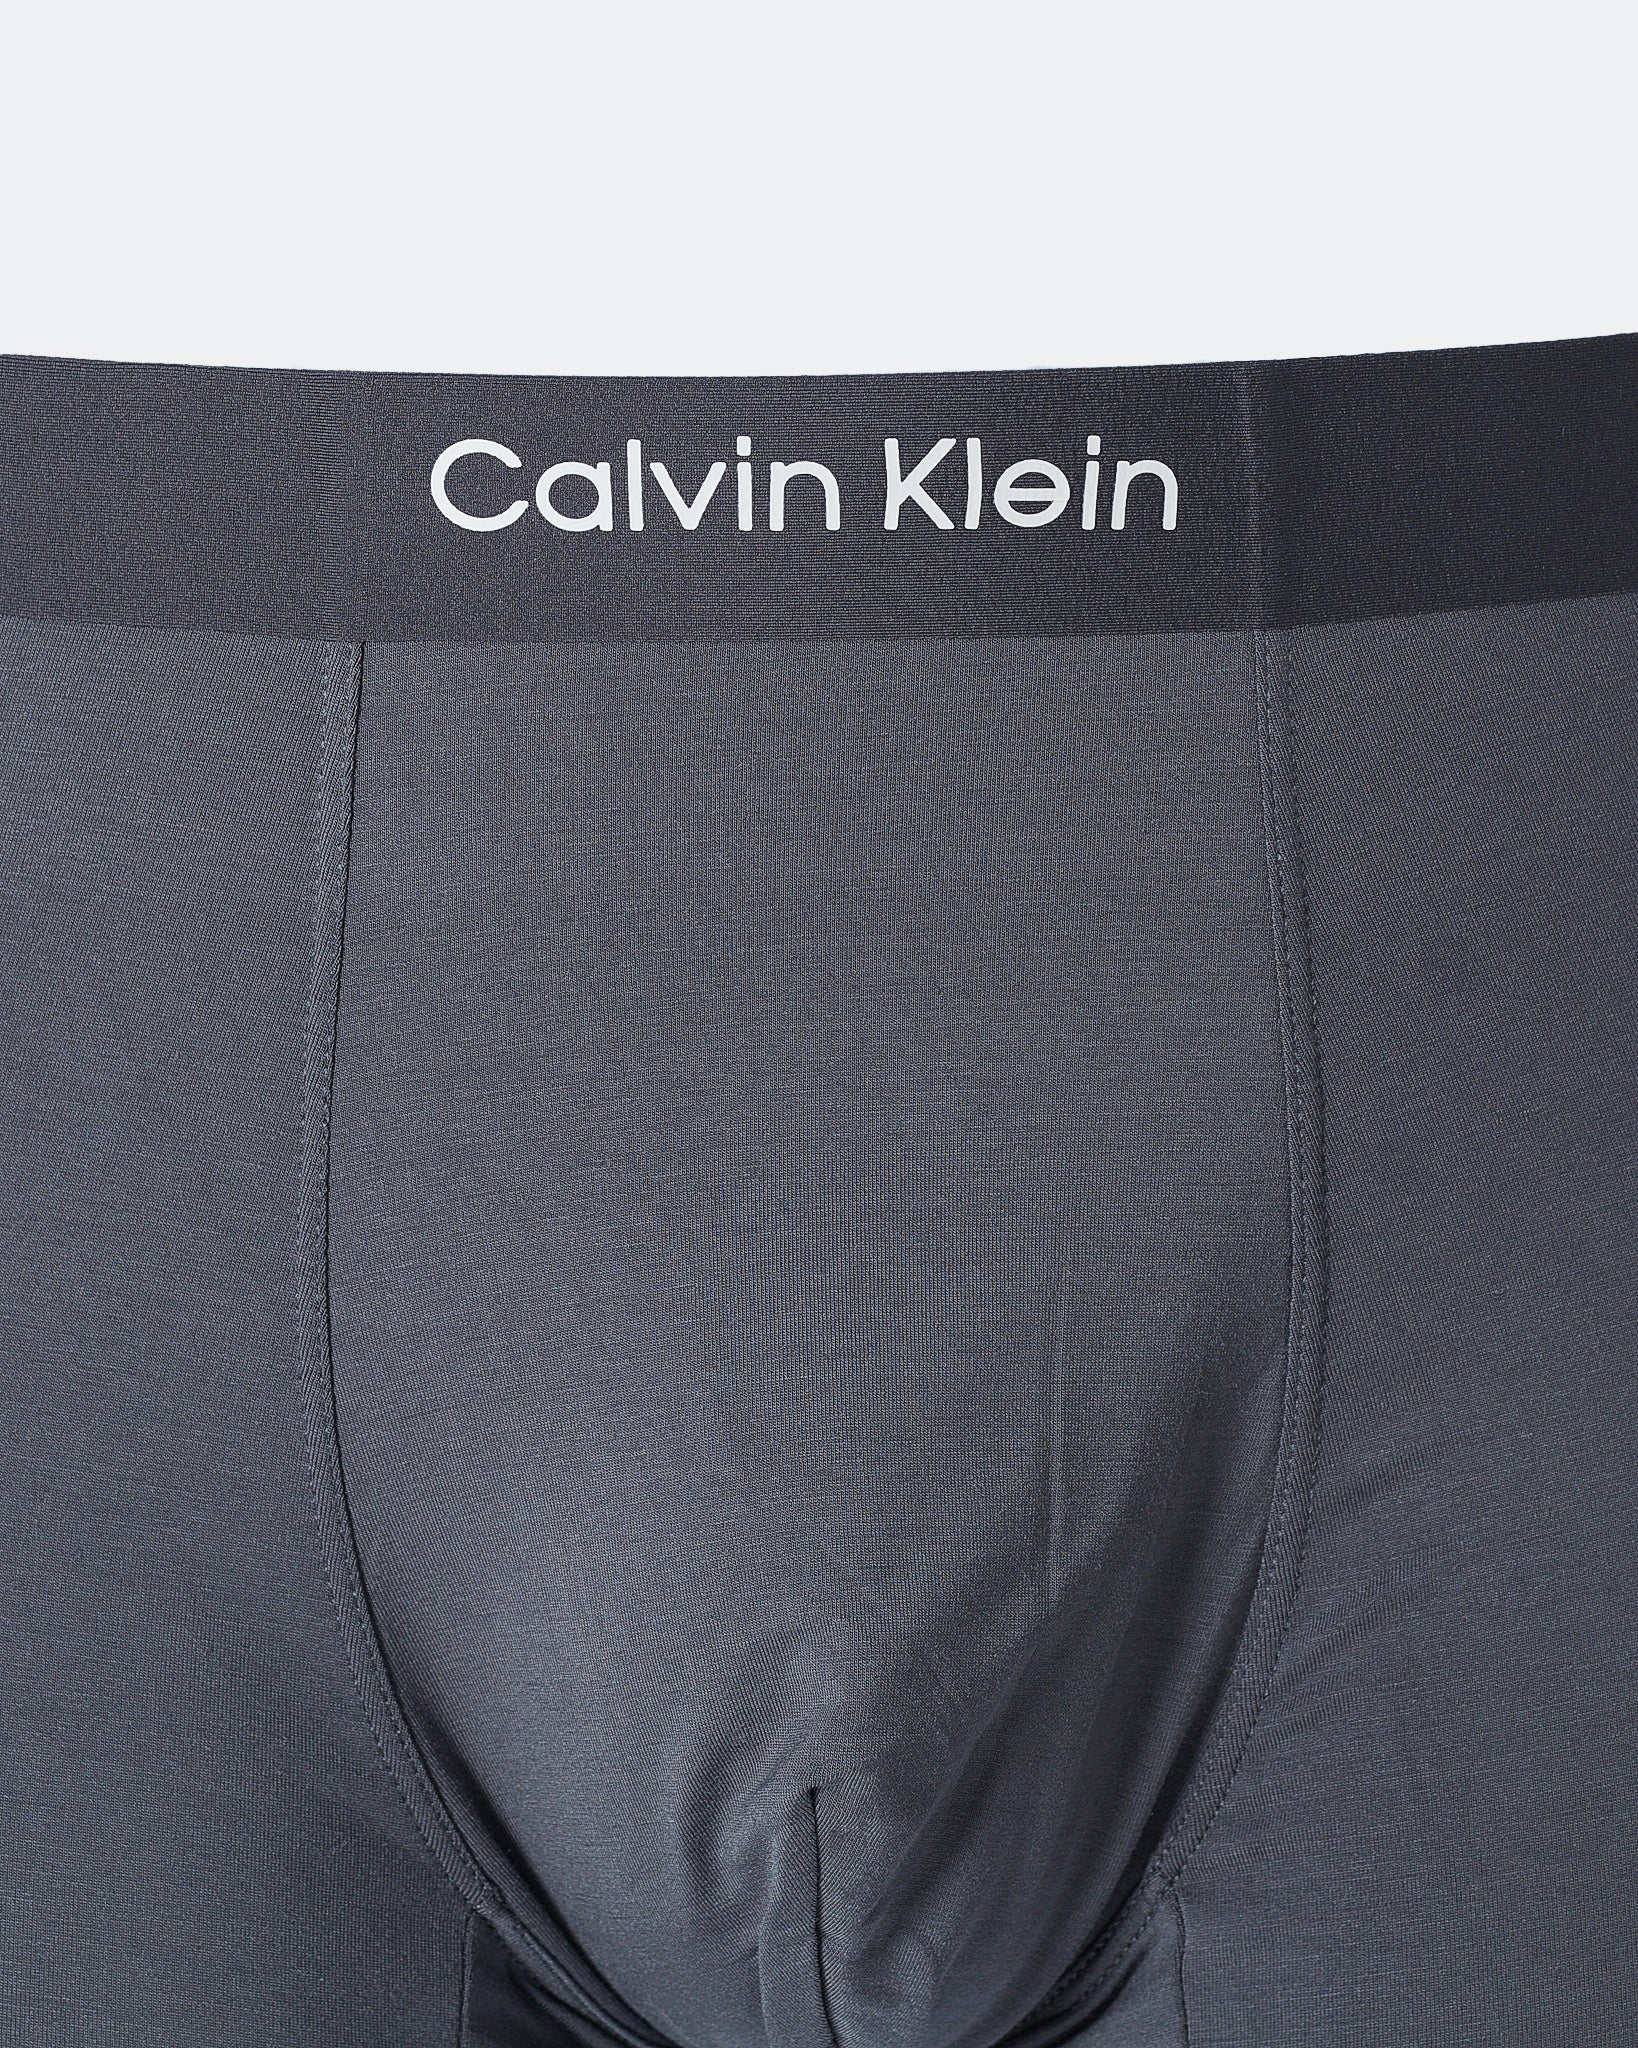 CK Plain Color Men Dark Grey Underwear 6.90